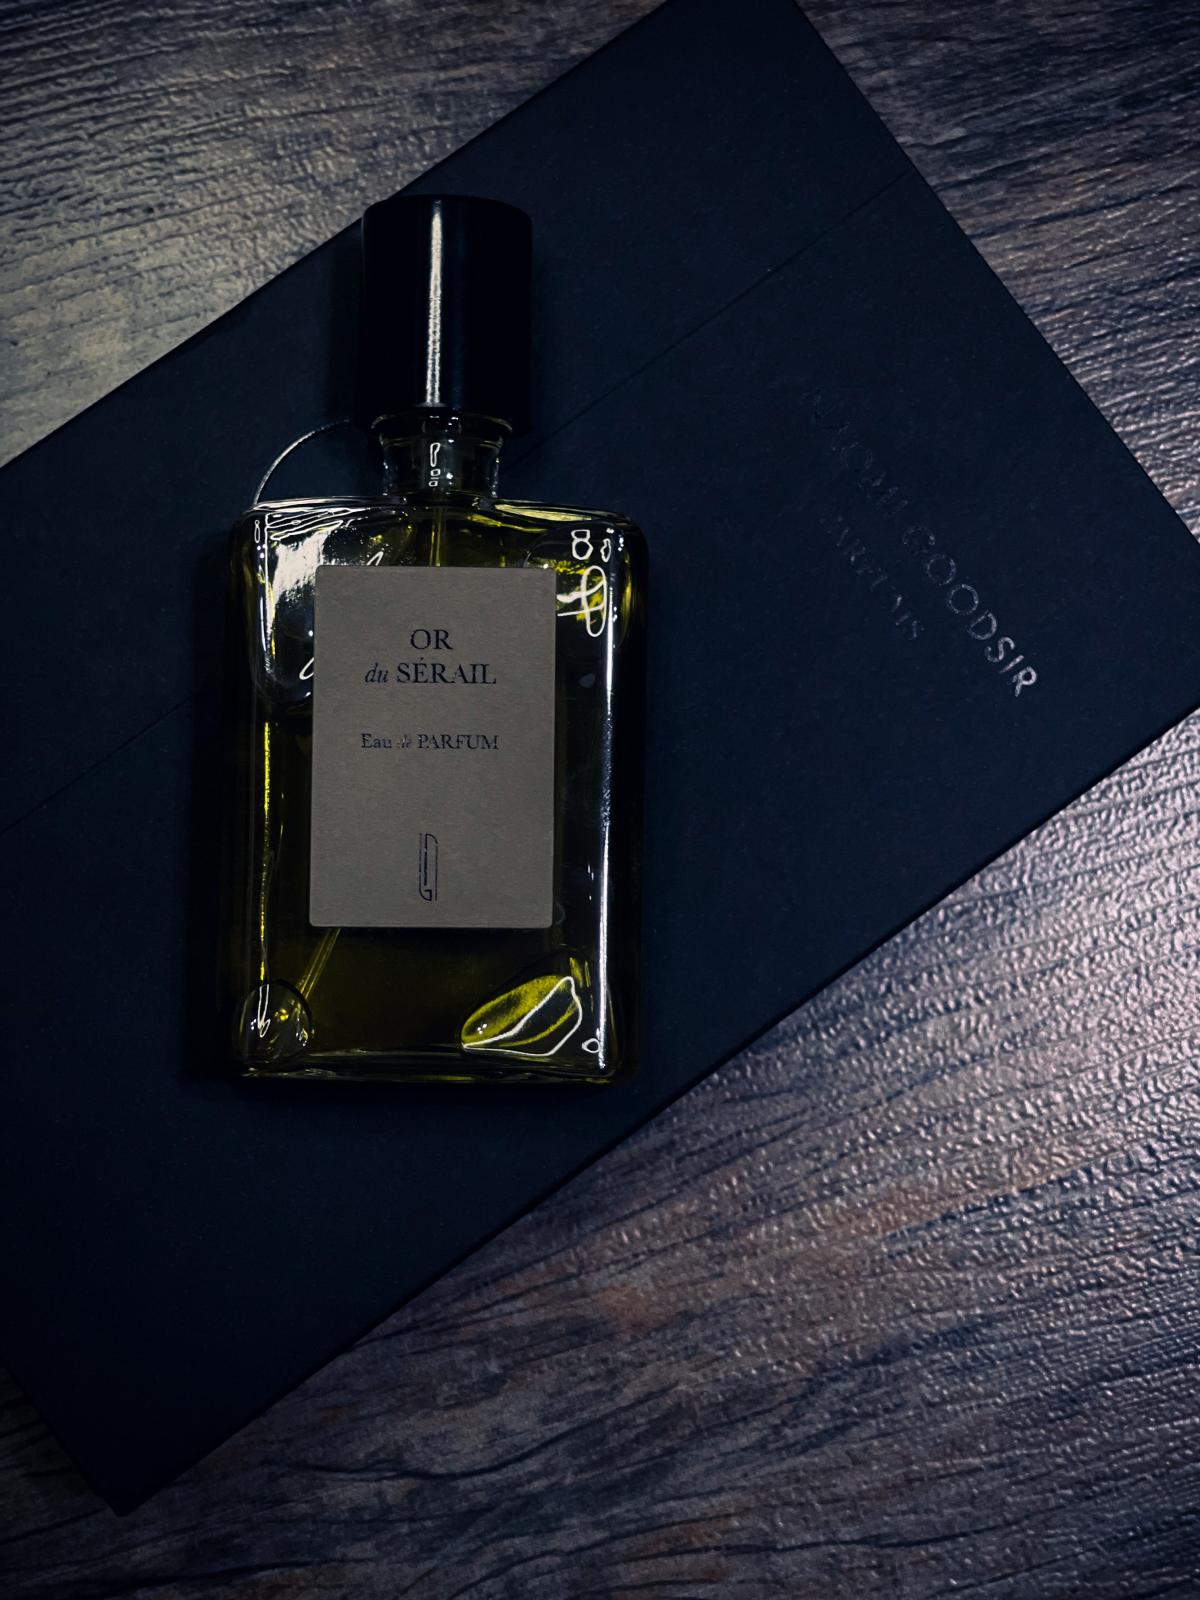 Or du Serail Naomi Goodsir perfume - a fragrance for women and men 2014